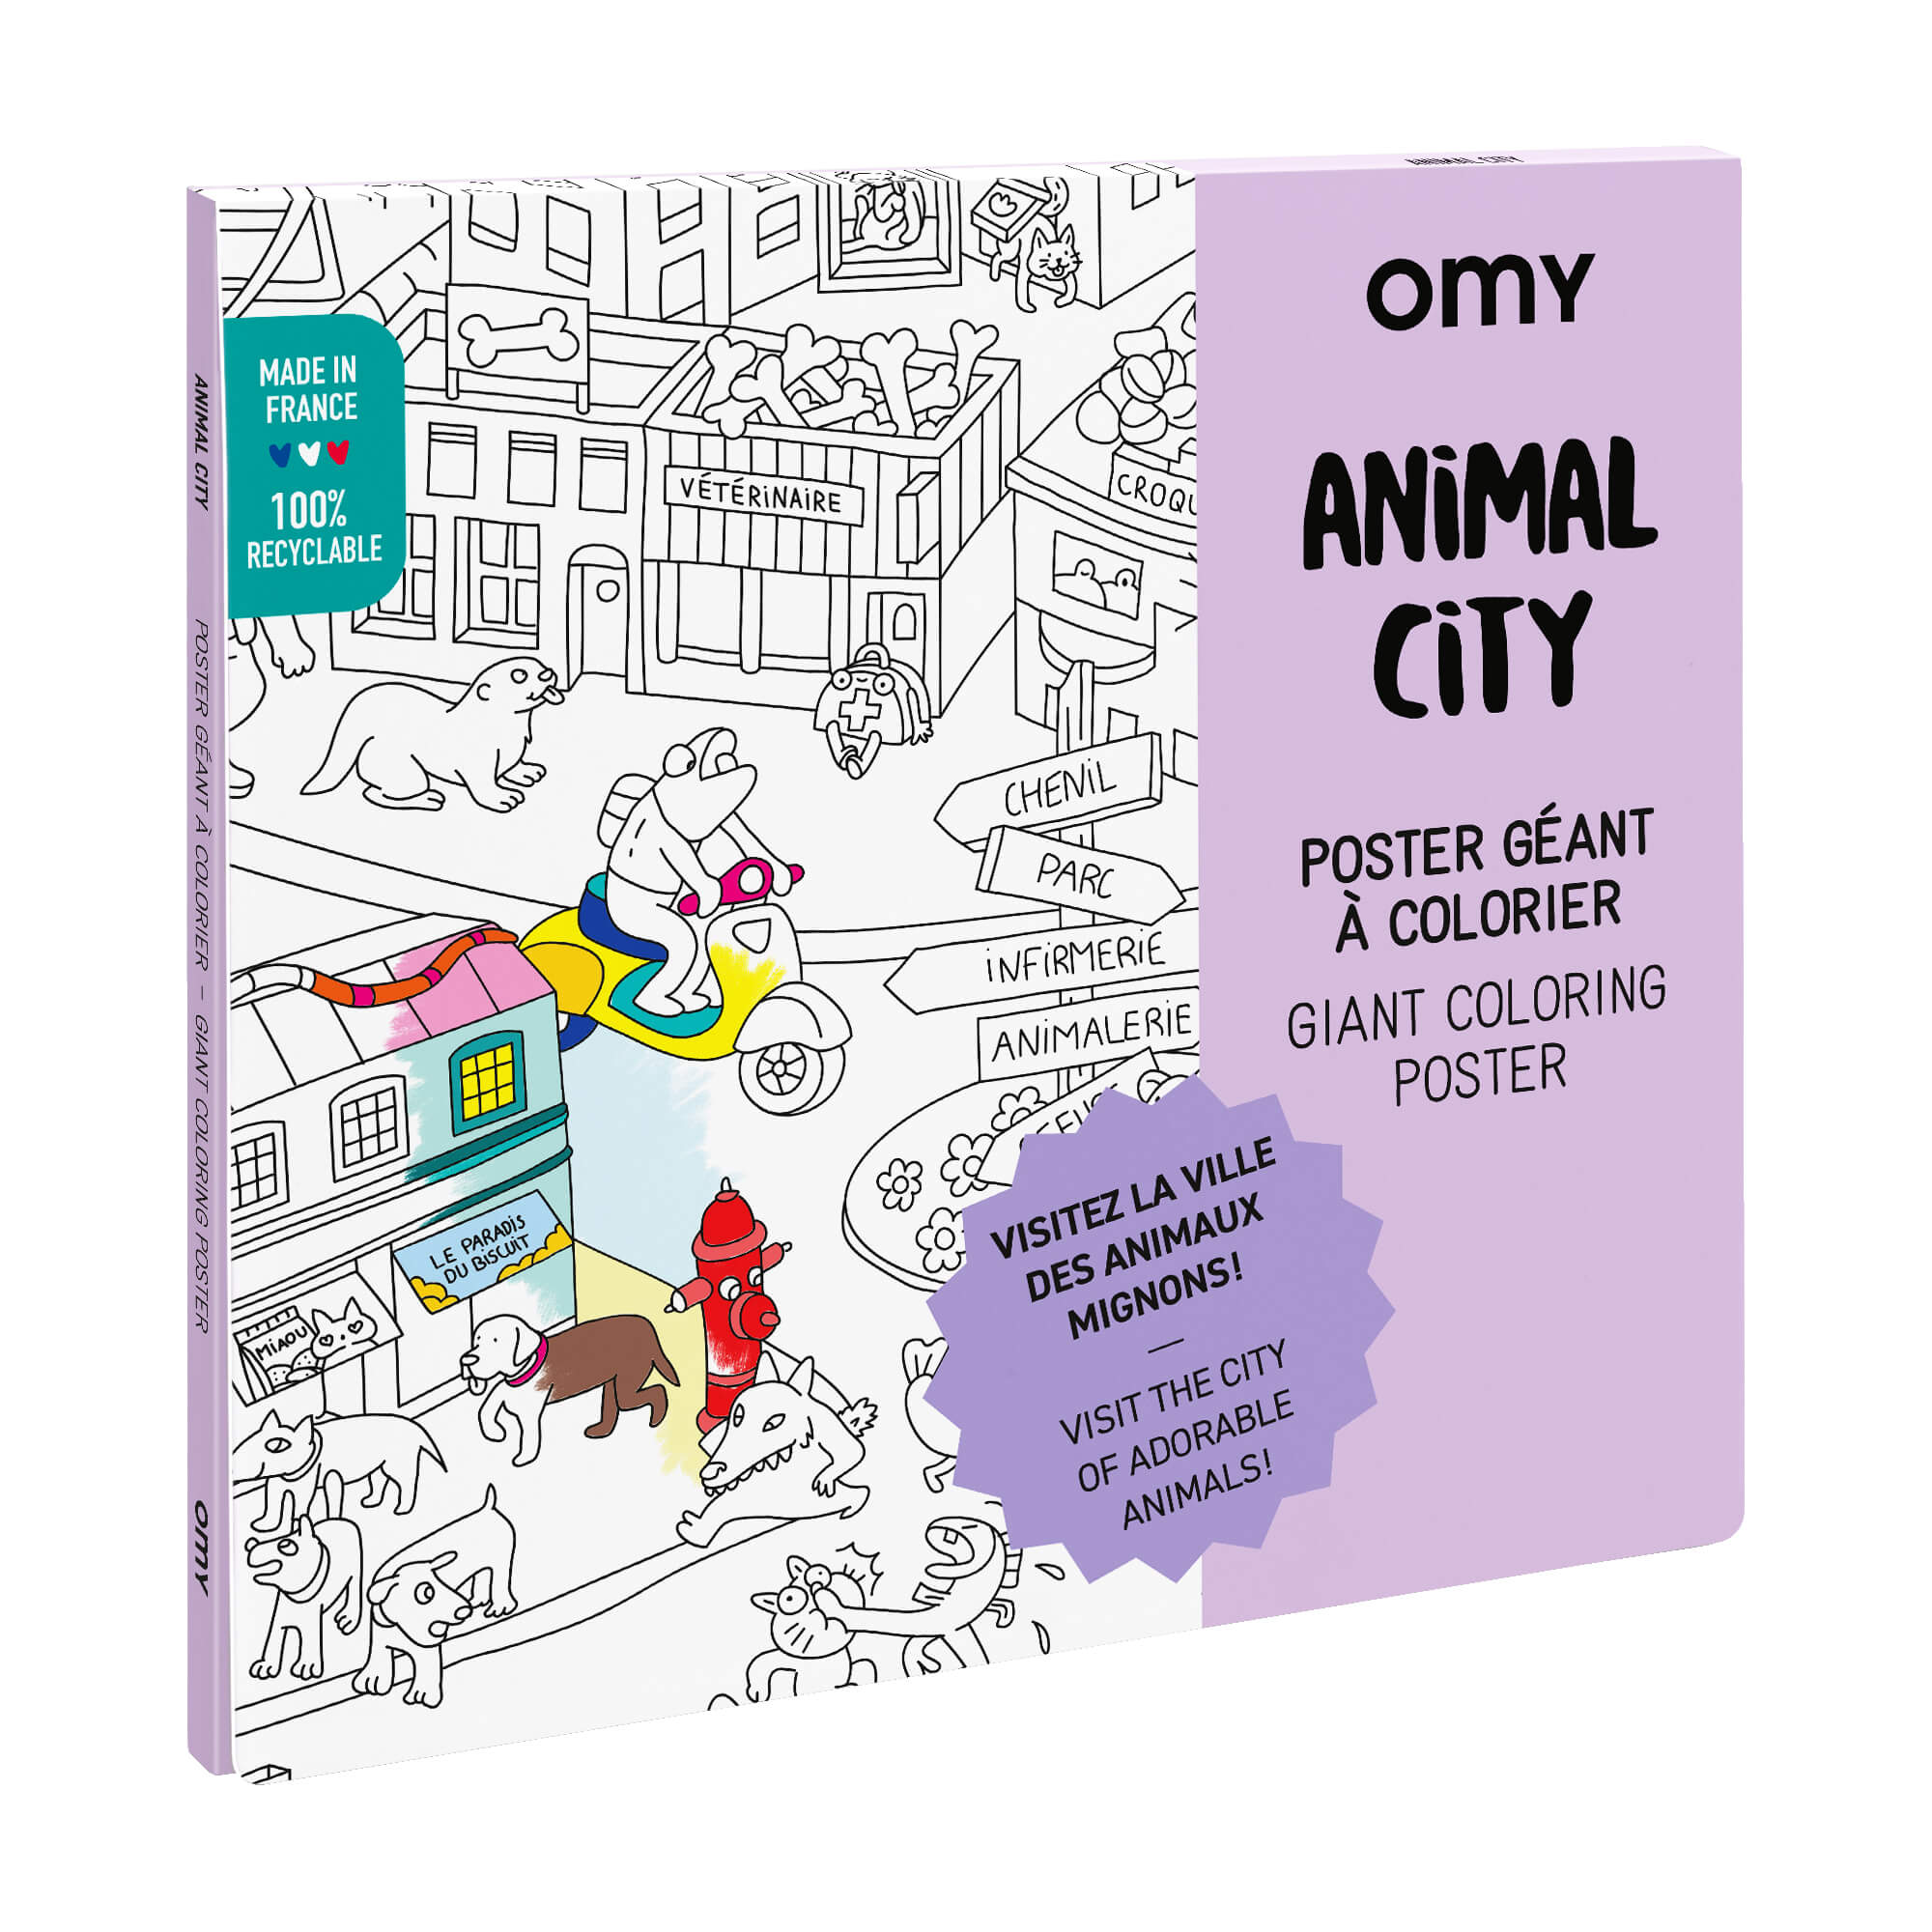 Poster Géant à colorier Animal City by OMY